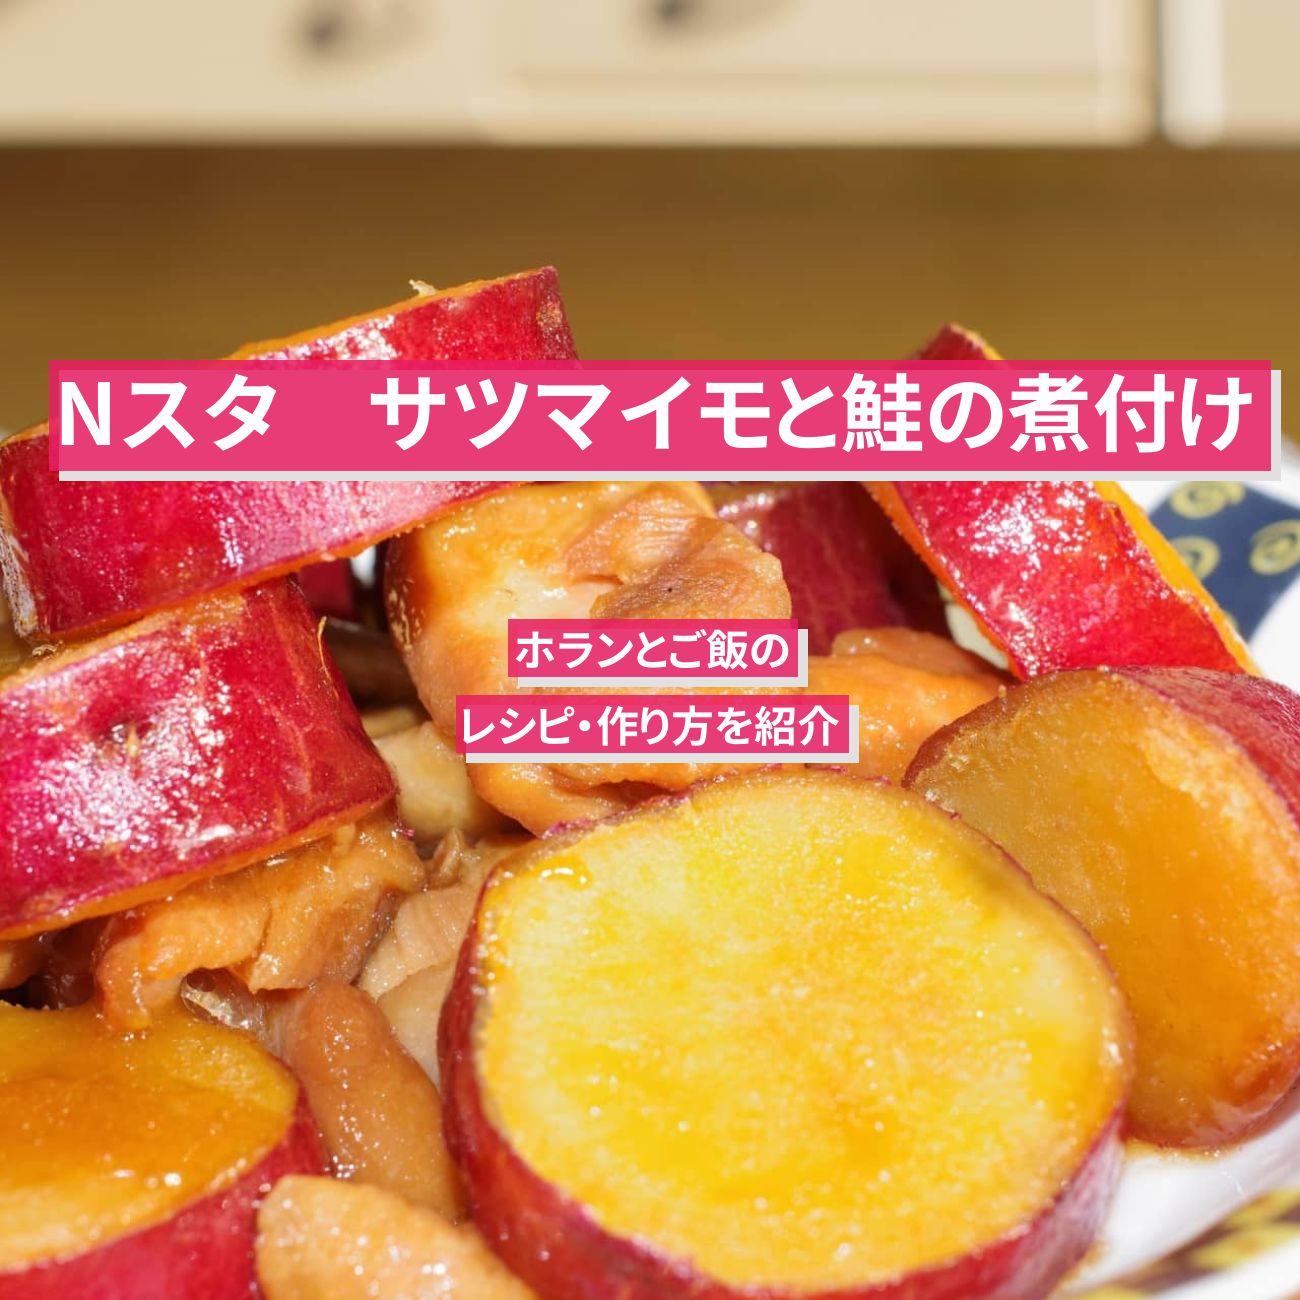 【Nスタ】『サツマイモと鮭の煮付け』ホランとご飯のレシピ・作り方を紹介